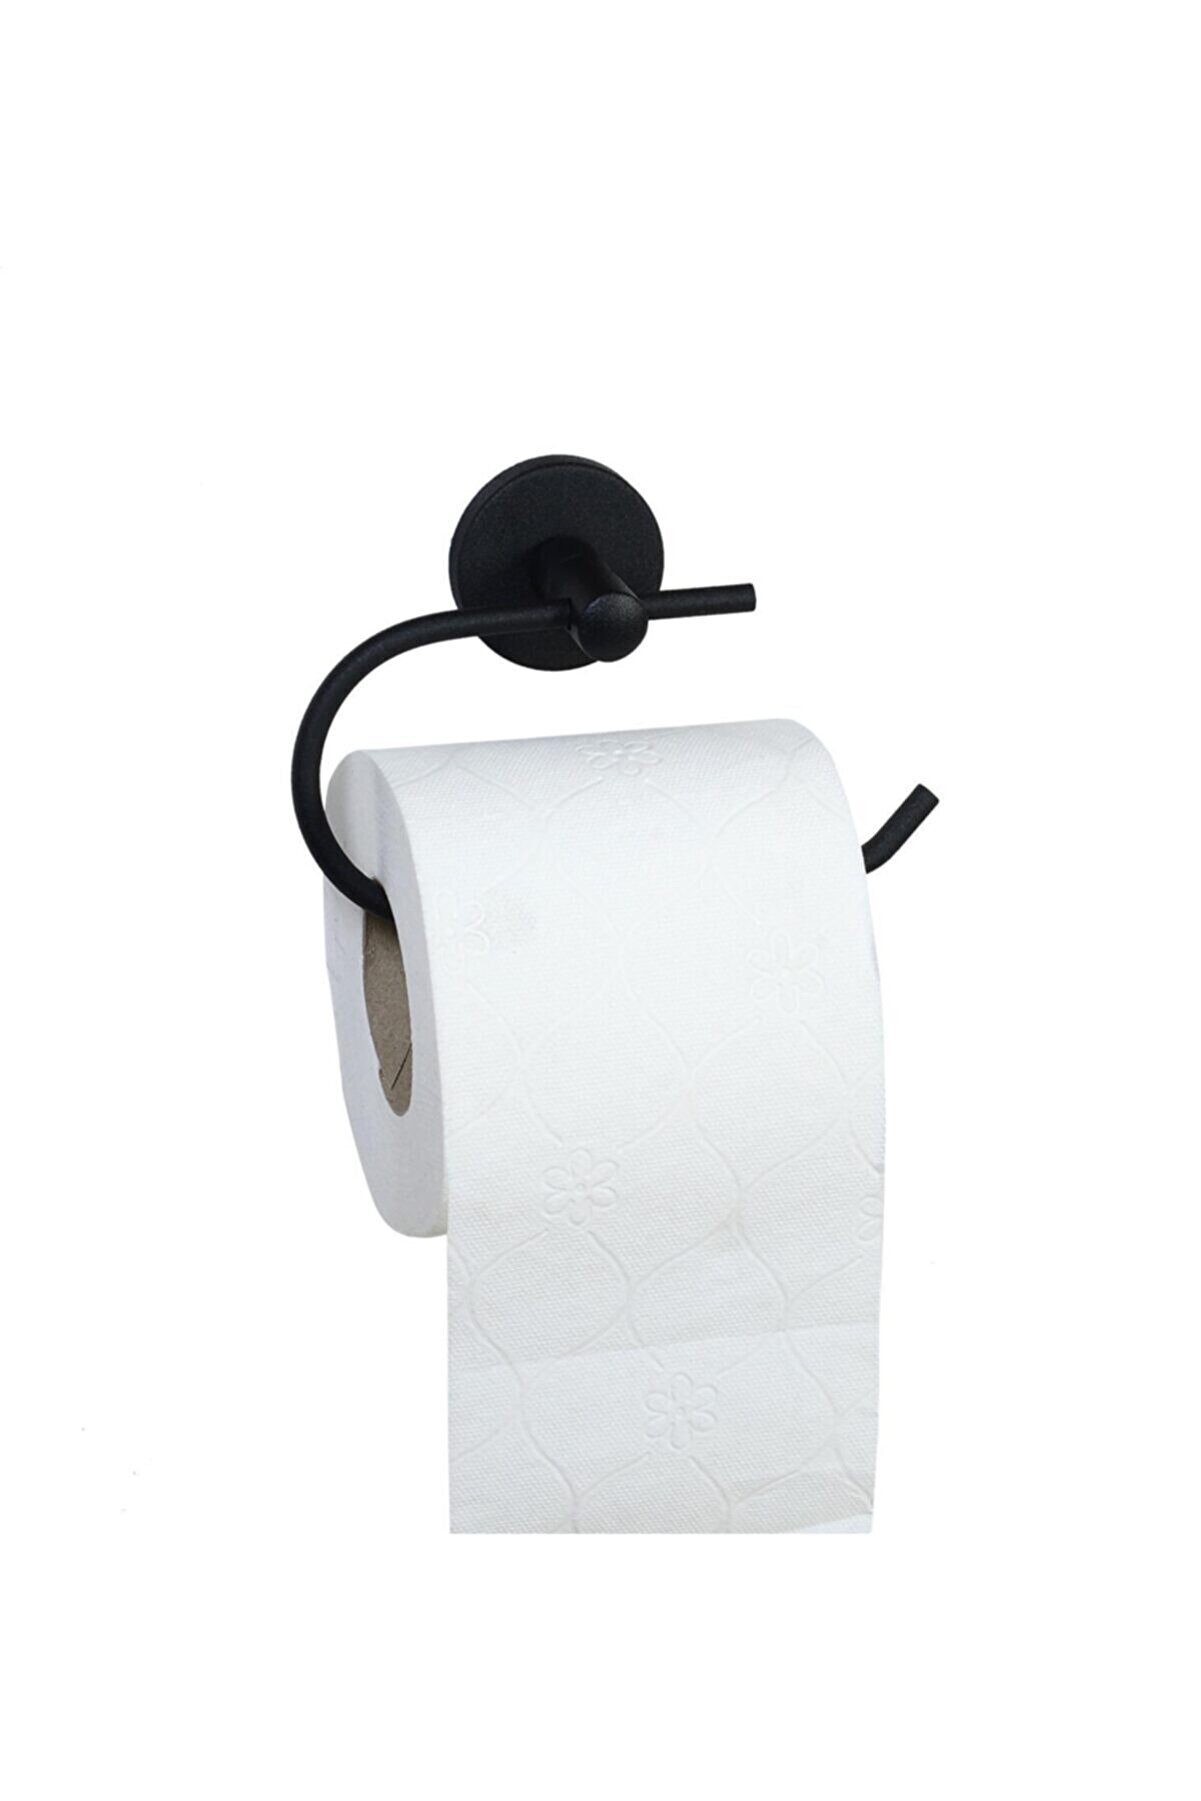 MultiStore Siyah Wc Kağıtlık Tuvalet Kağıtlığı Tuvalet Kağıdı Askısı Kapaksız Tuvalet Kağıtlık